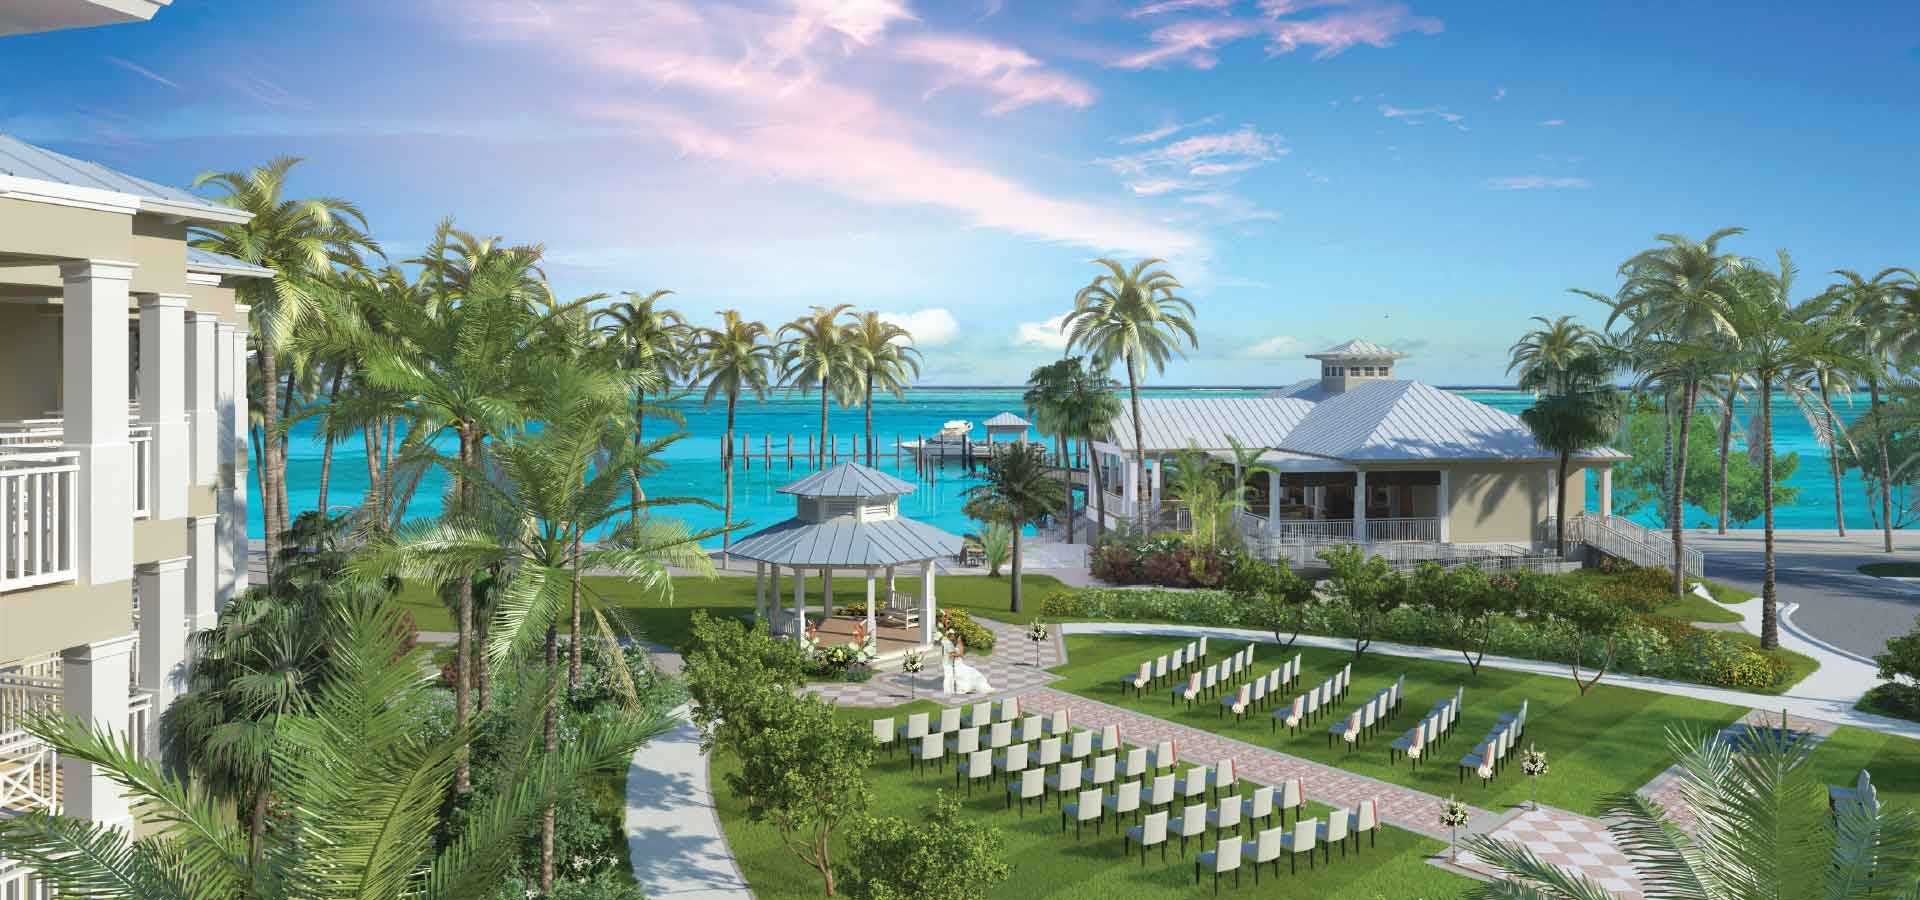 Playa Largo Resort and Spa - 4